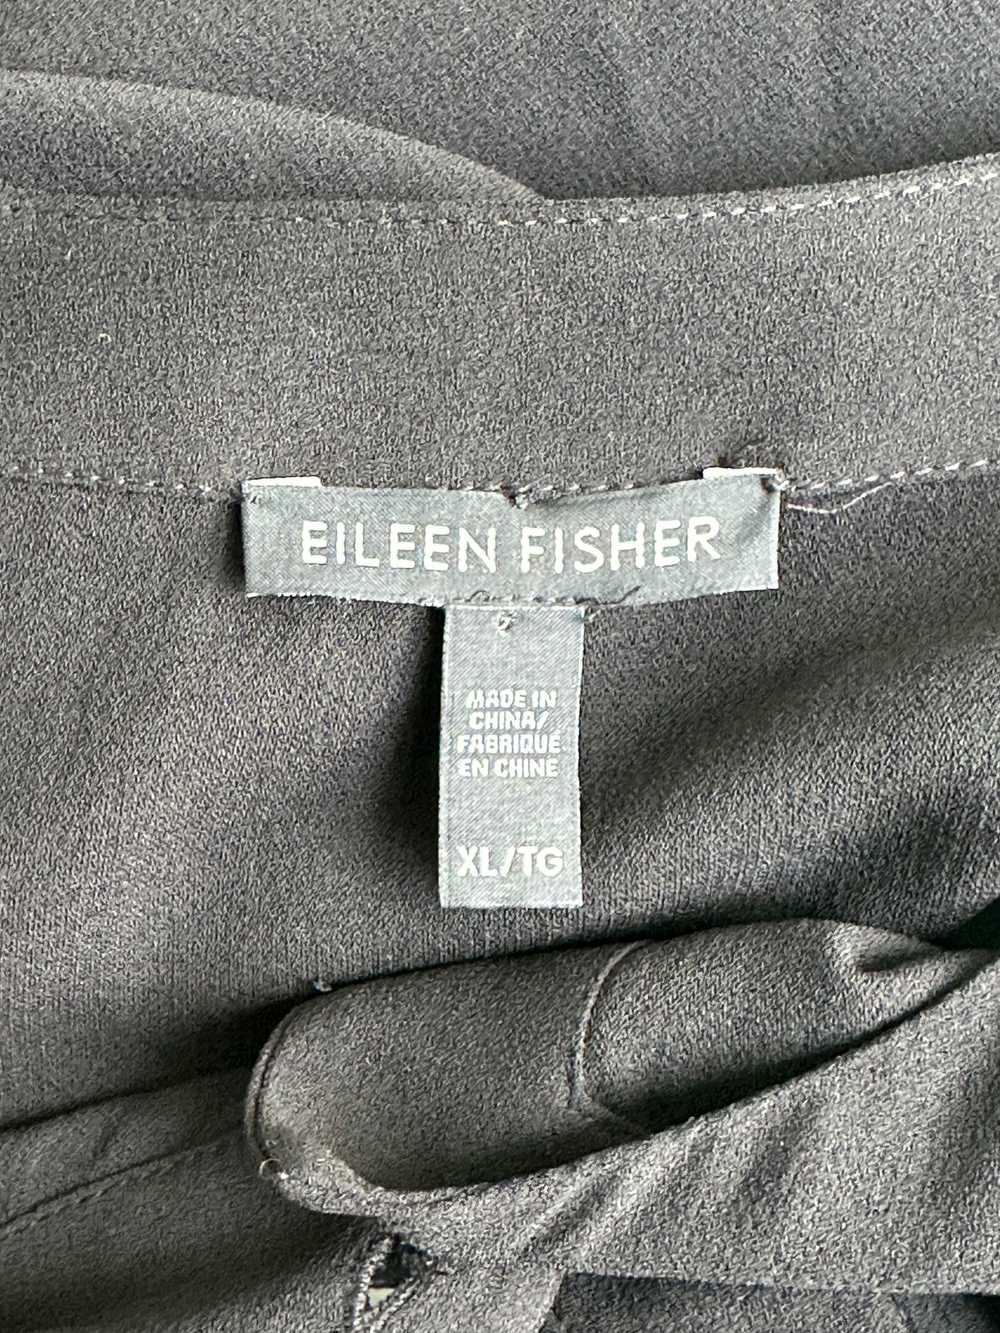 Eileen Fisher Oversized Black Silk Top Size XL - image 3